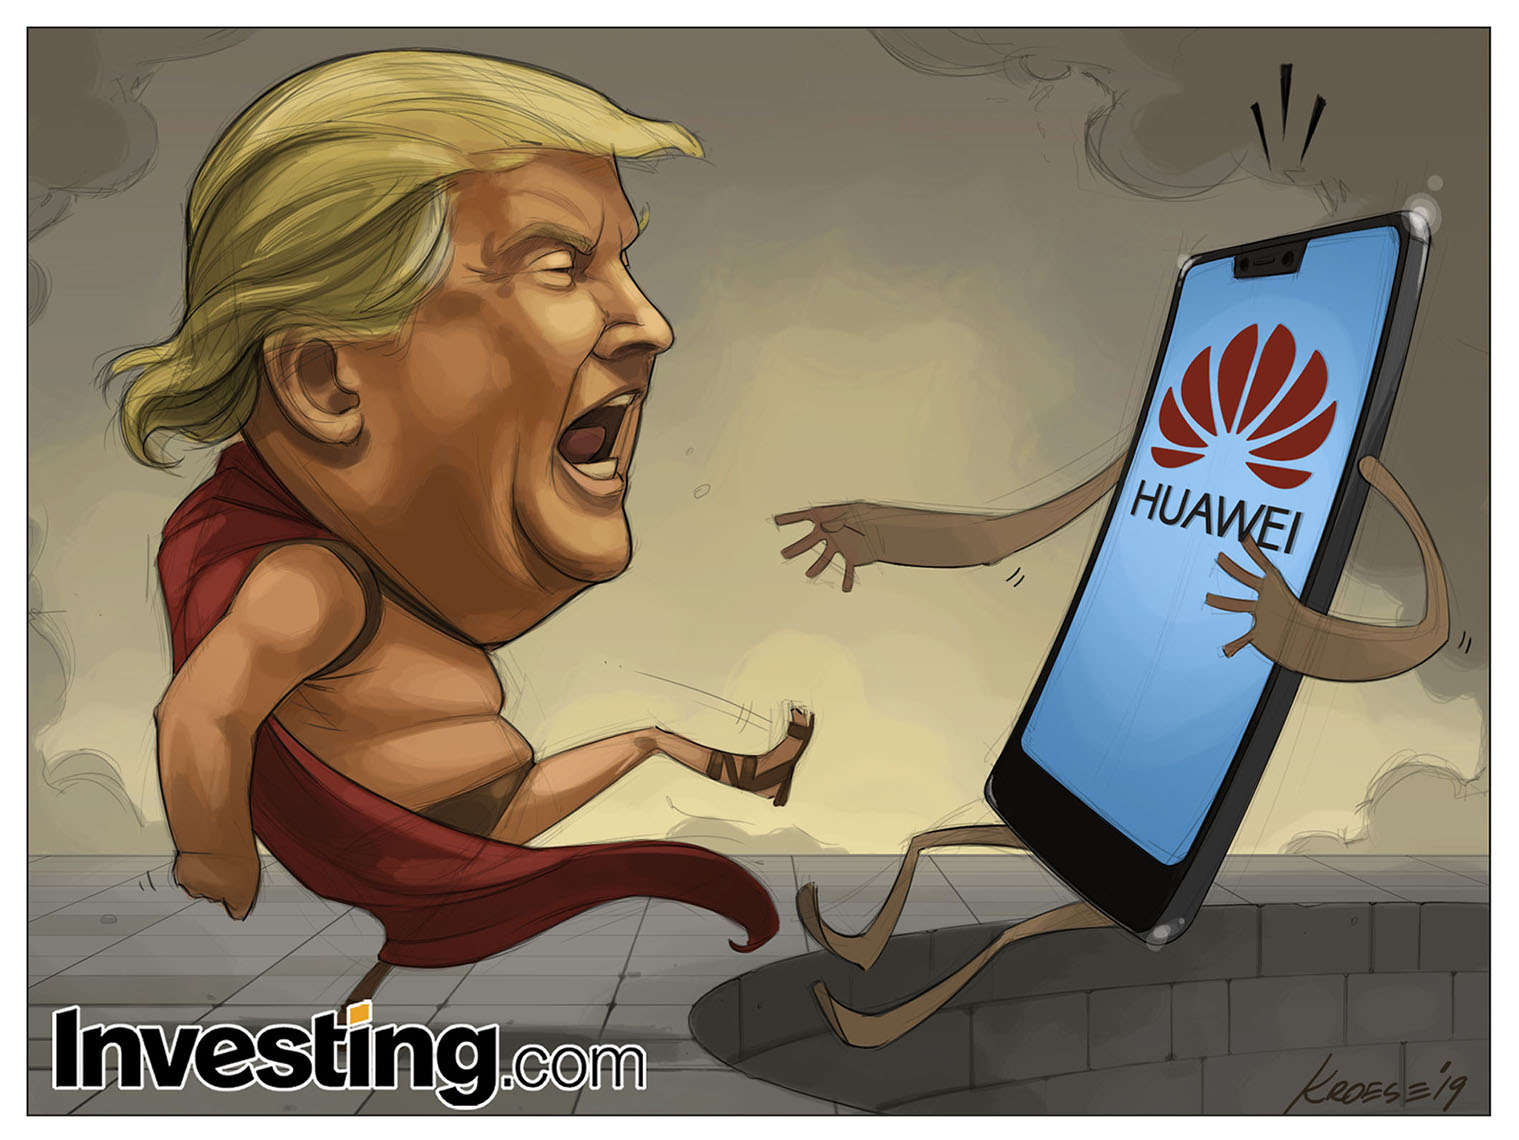 Trump’s Latest Move To Blacklist Huawei Fuel Fears Of U.S.-China Tech War